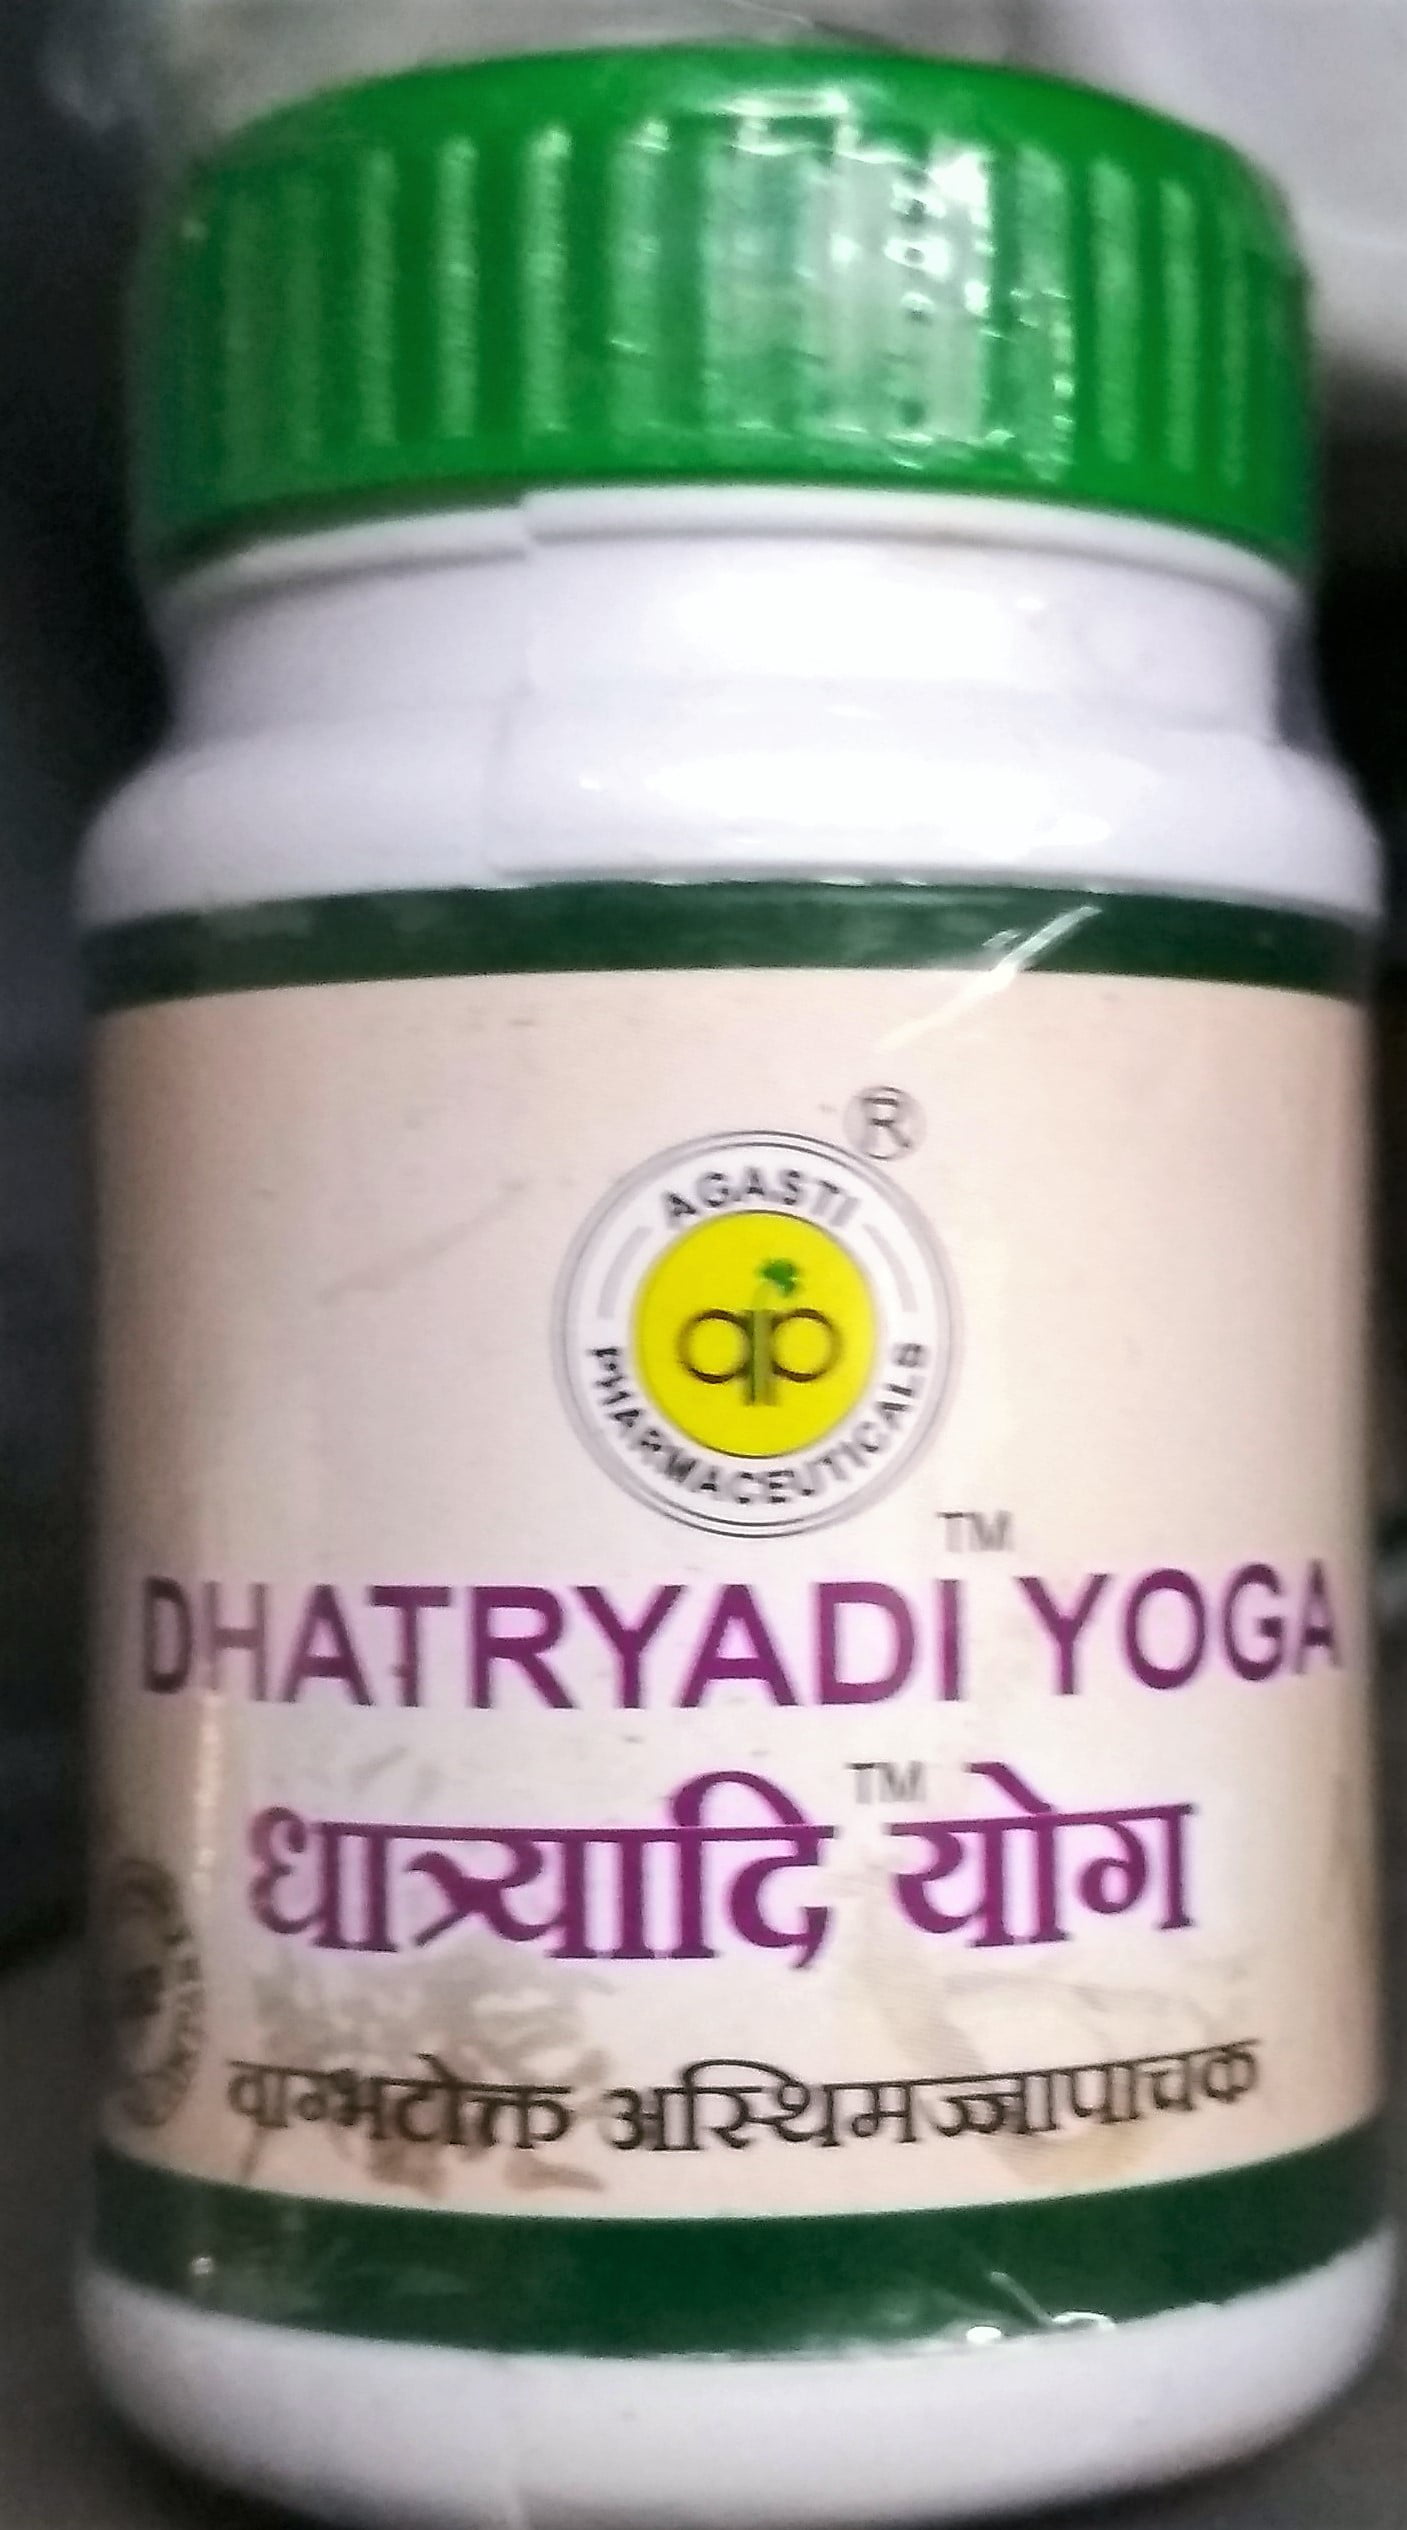 dhatryadi yog 100 gm 400tablet upto 15% off agasti pharmaceuticals